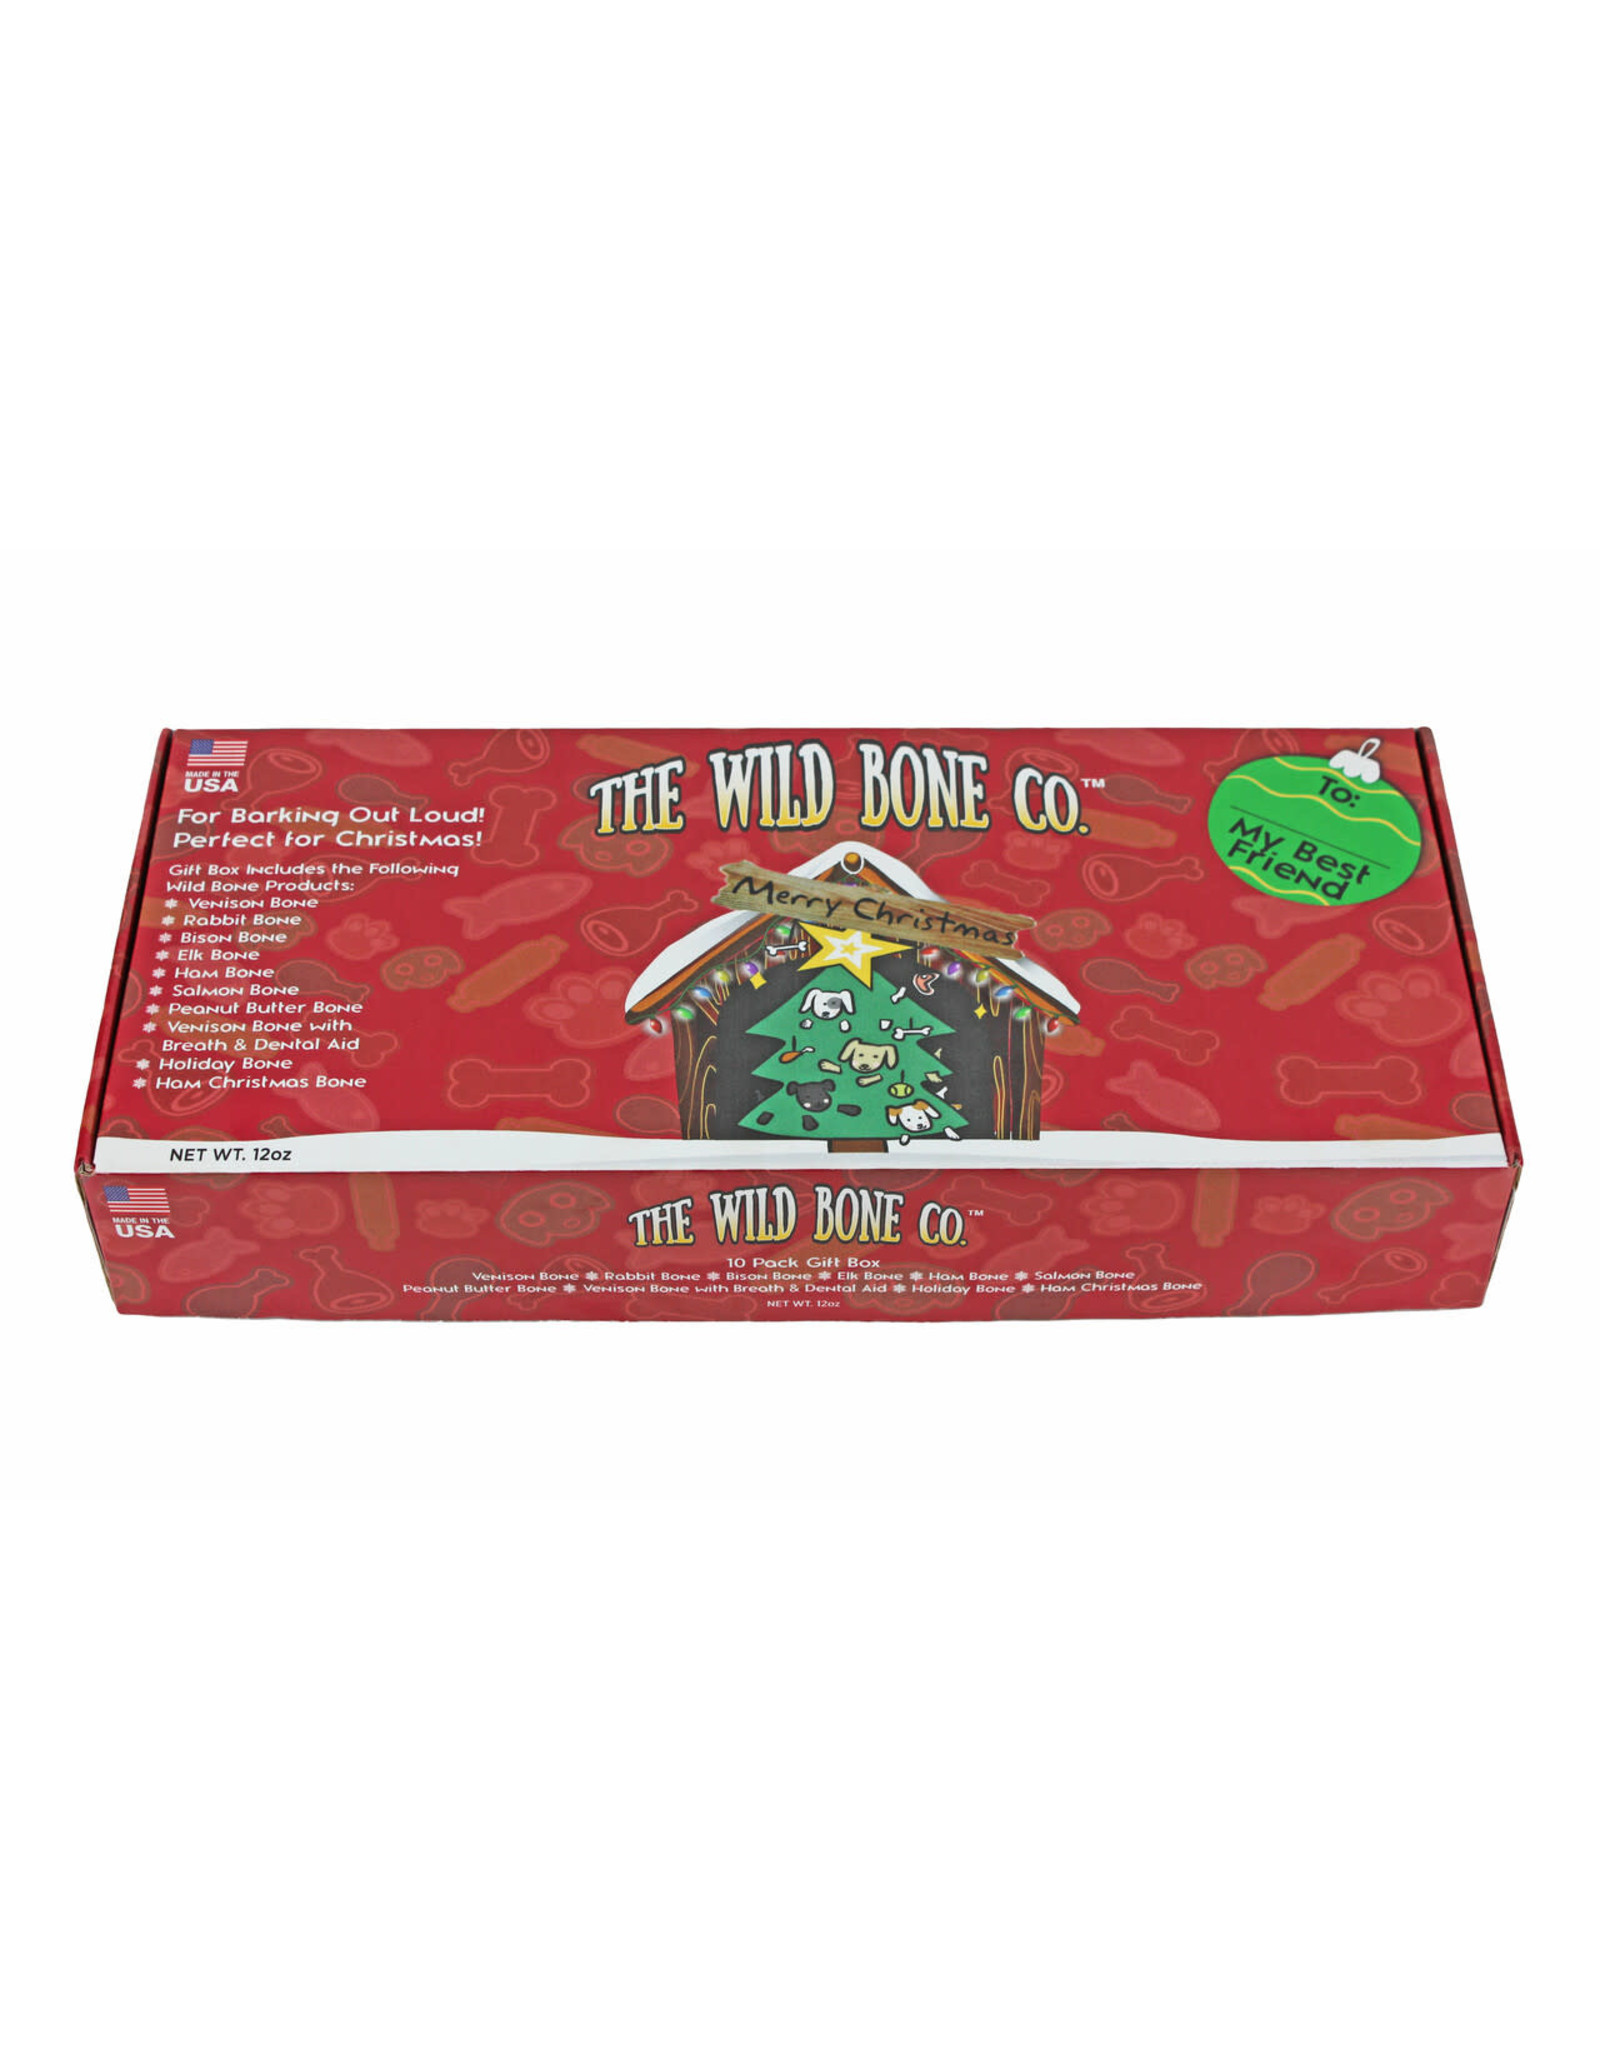 The Wild Bone Co. The Wild Bone Co. Holiday Gift Box 10pk